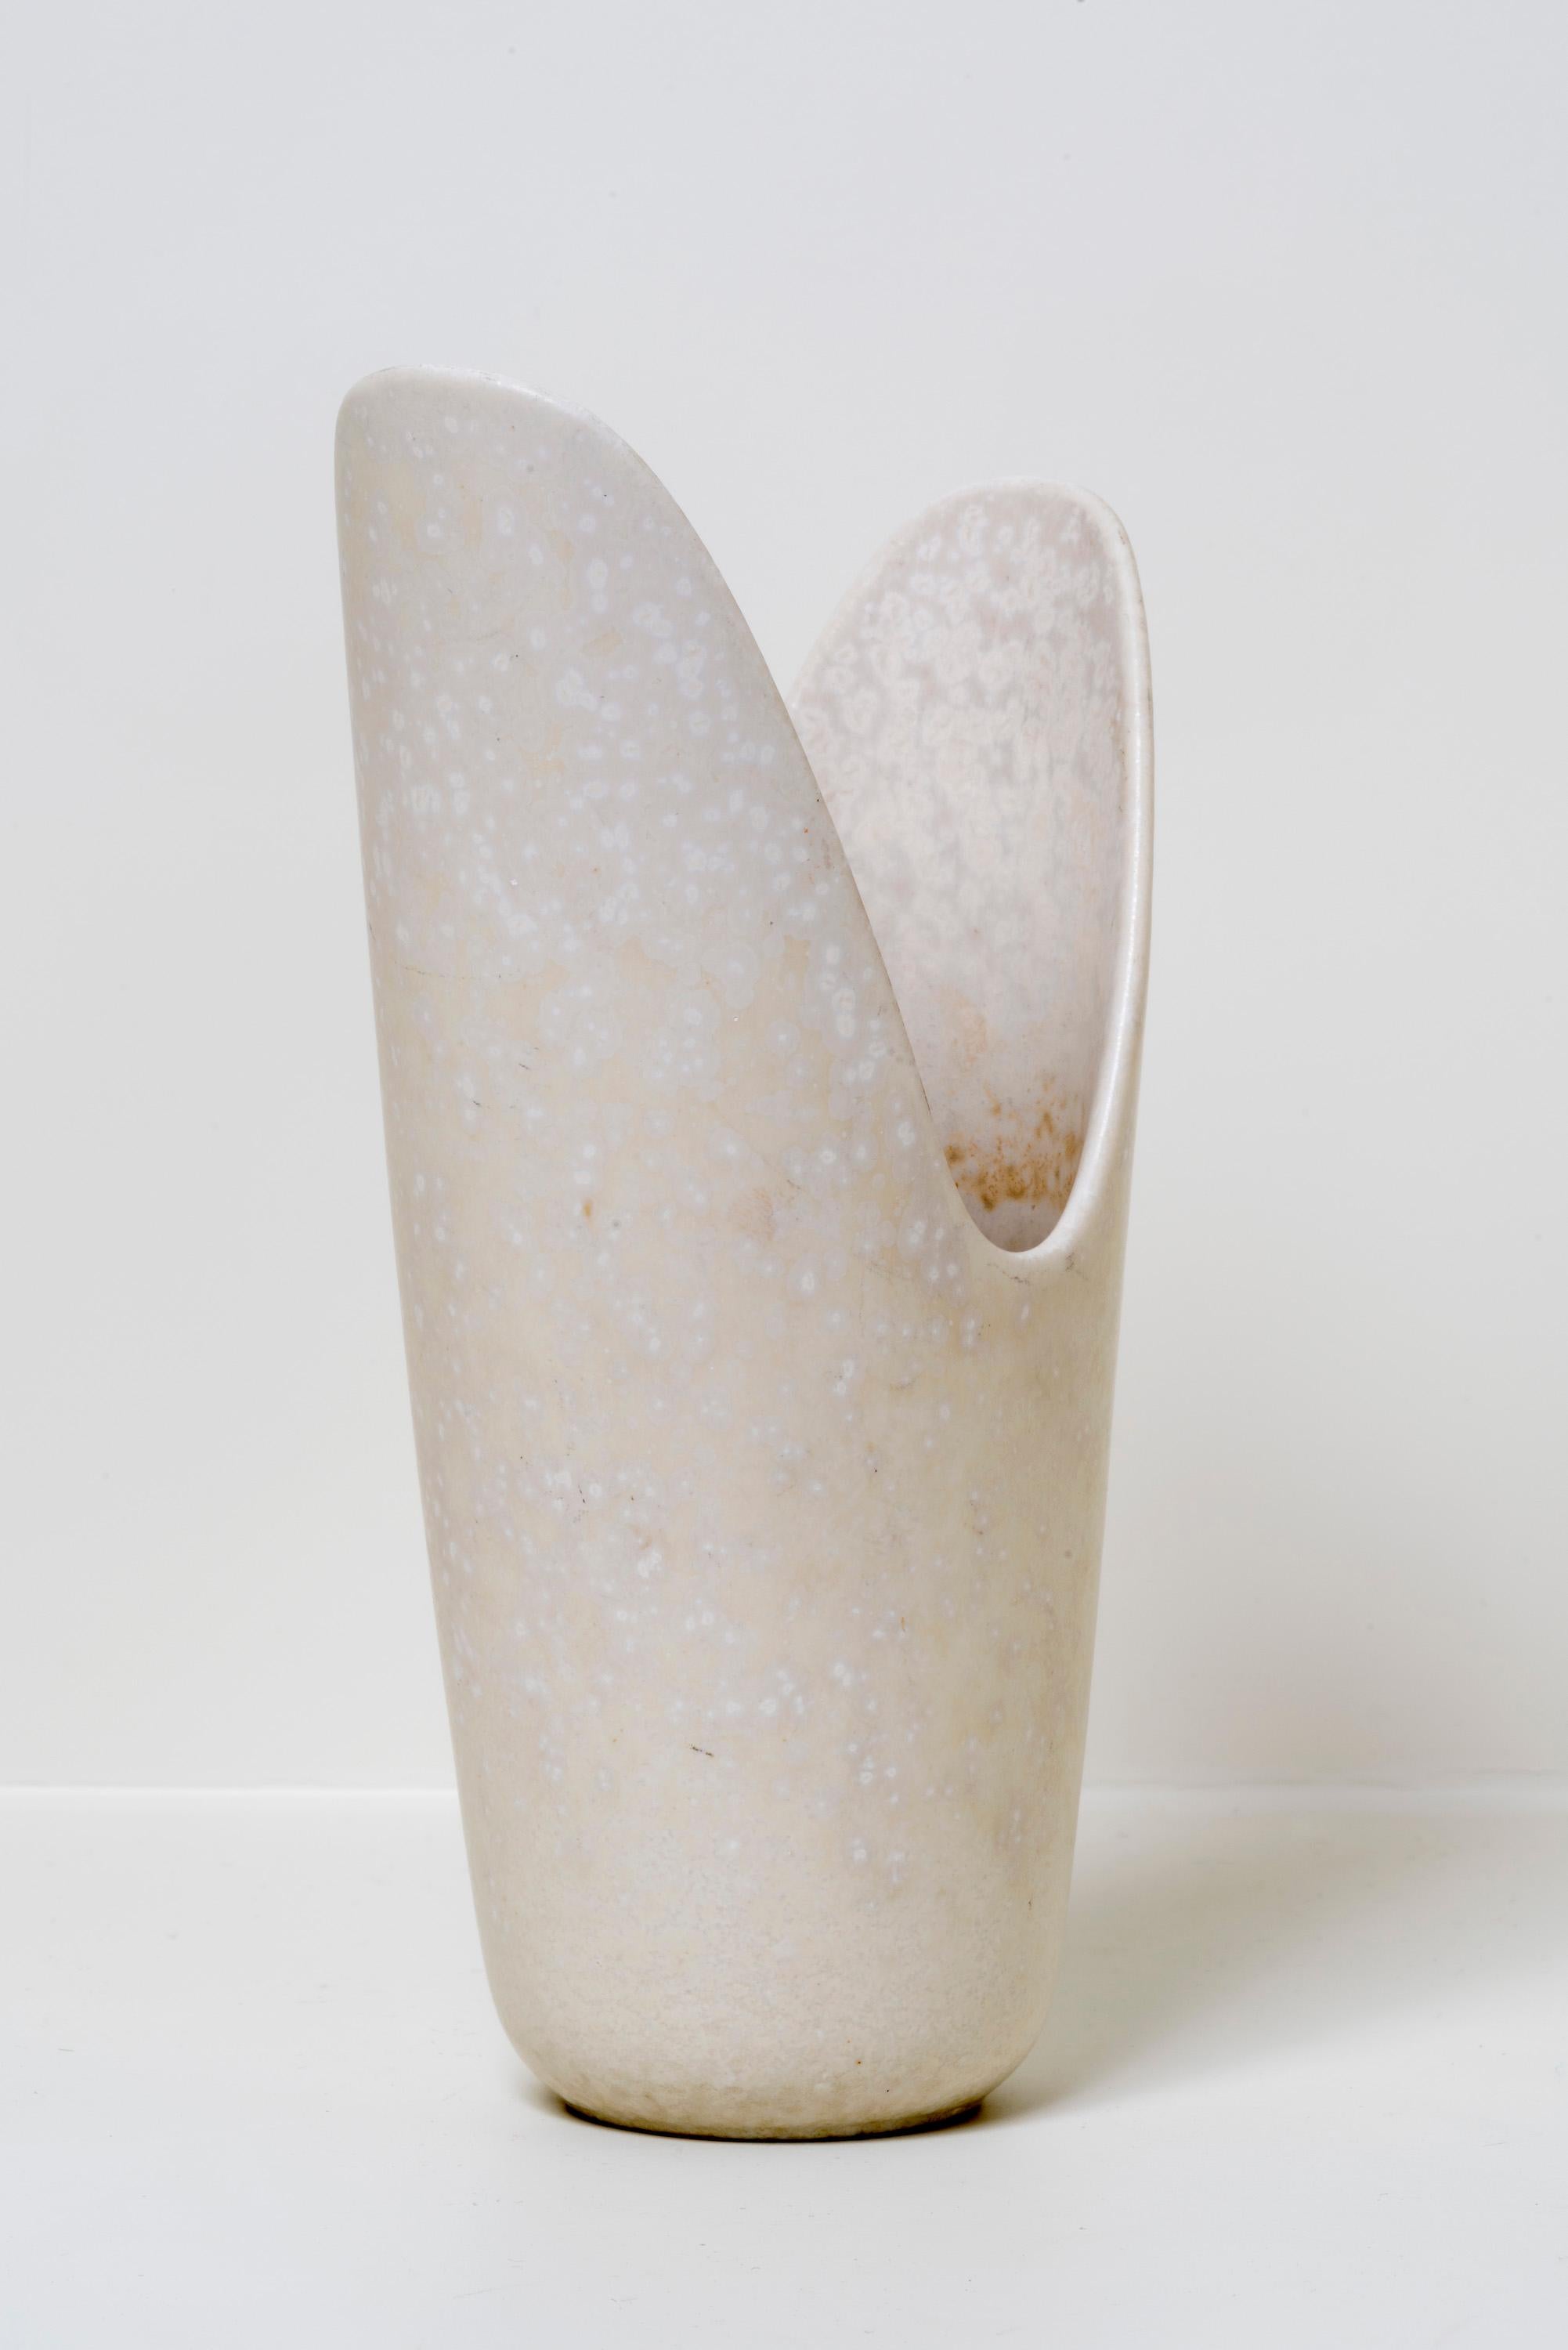 This stoneware vase named 